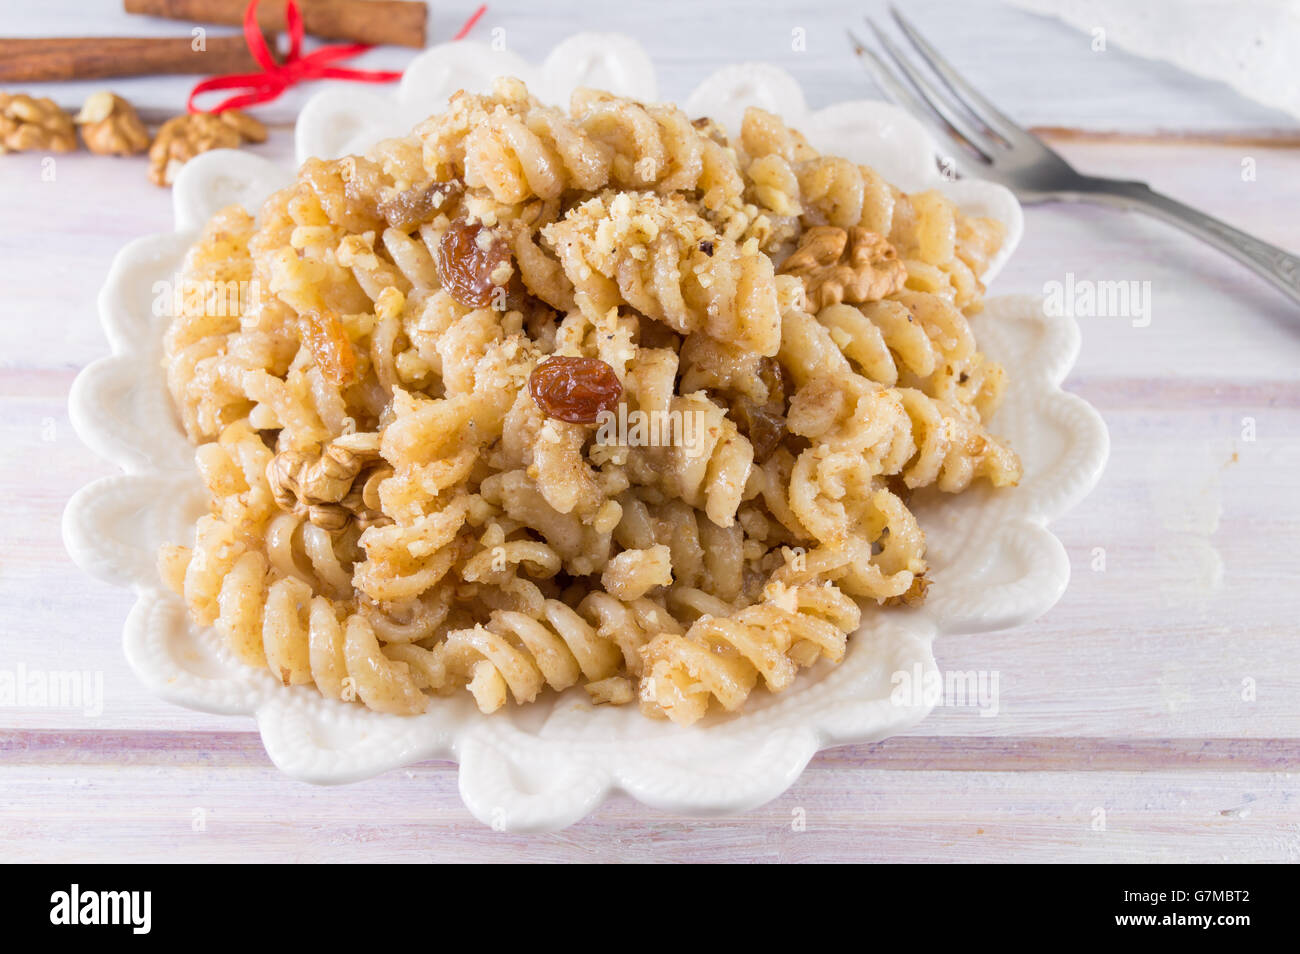 Sweet pasta with honey, nuts raisins and brown sugar Stock Photo